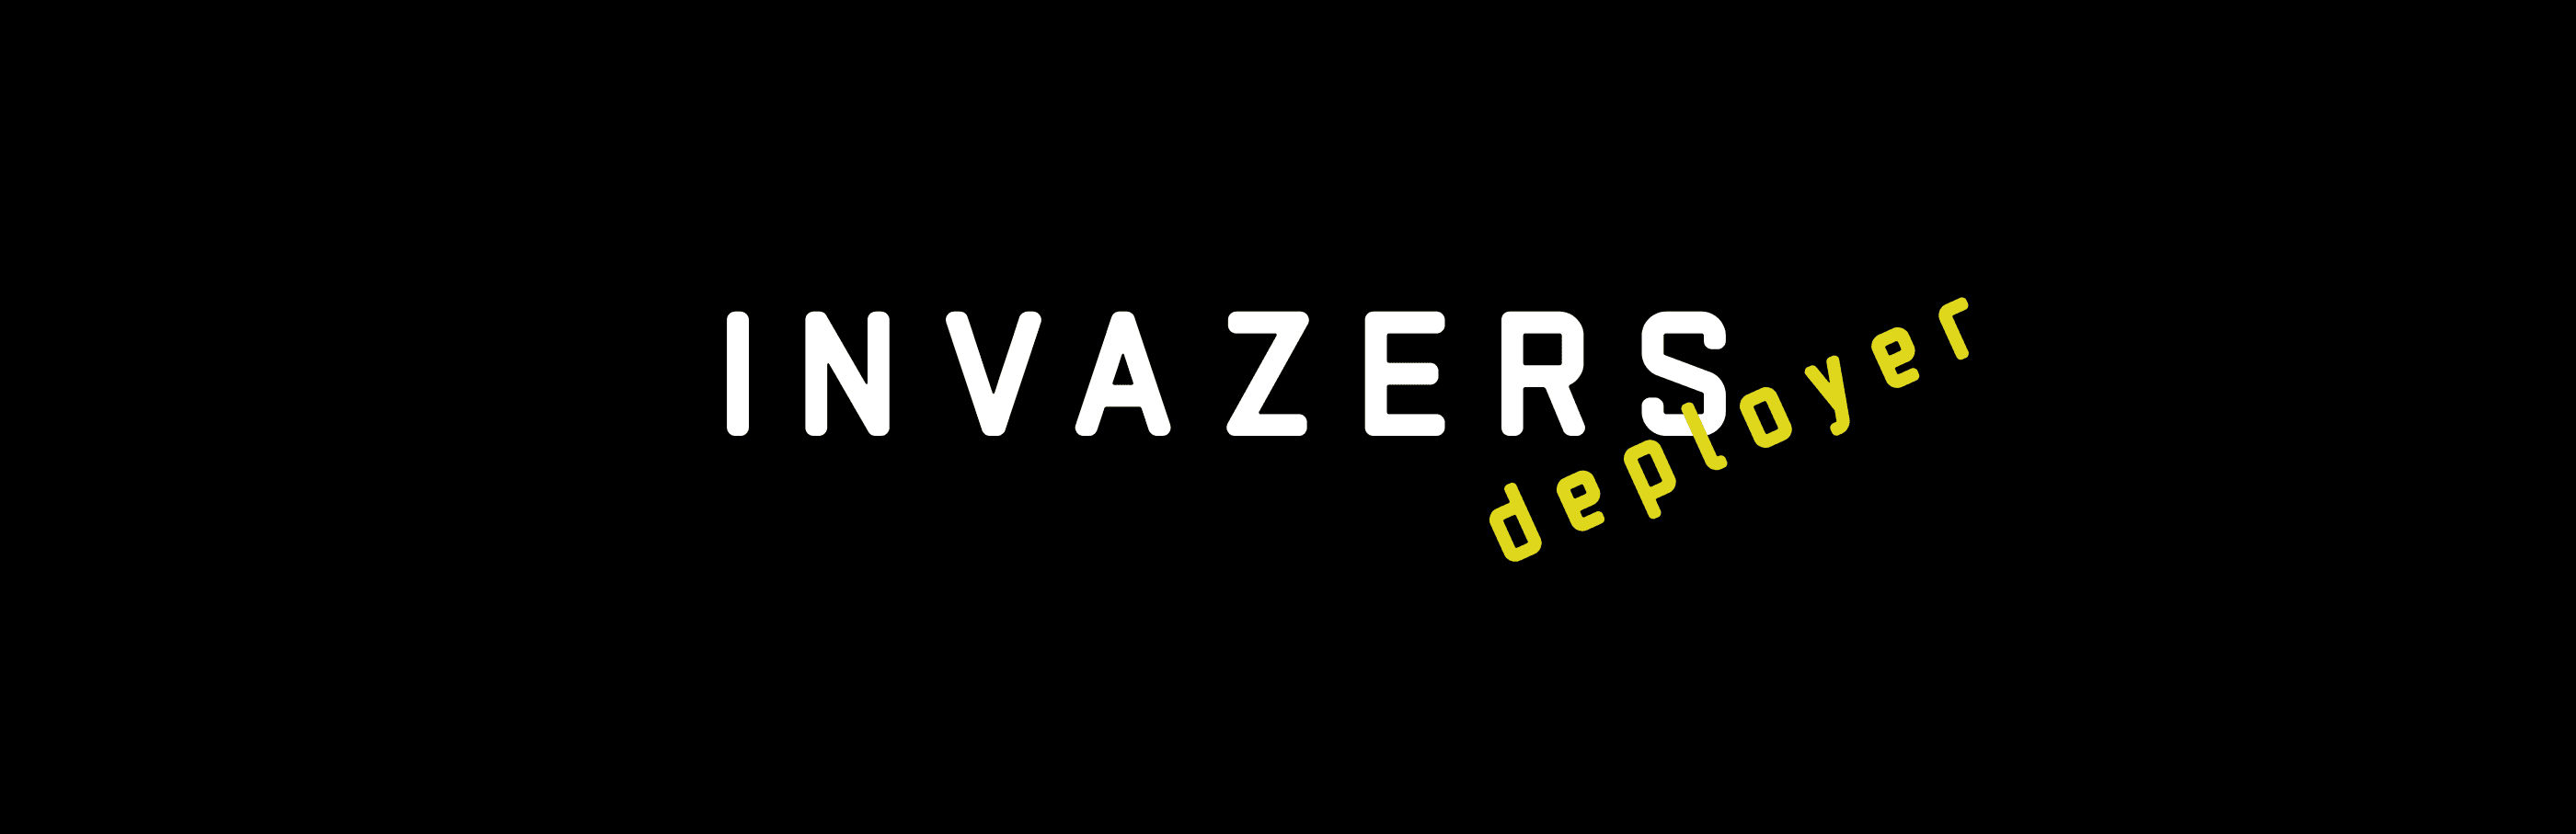 invazers_io banner